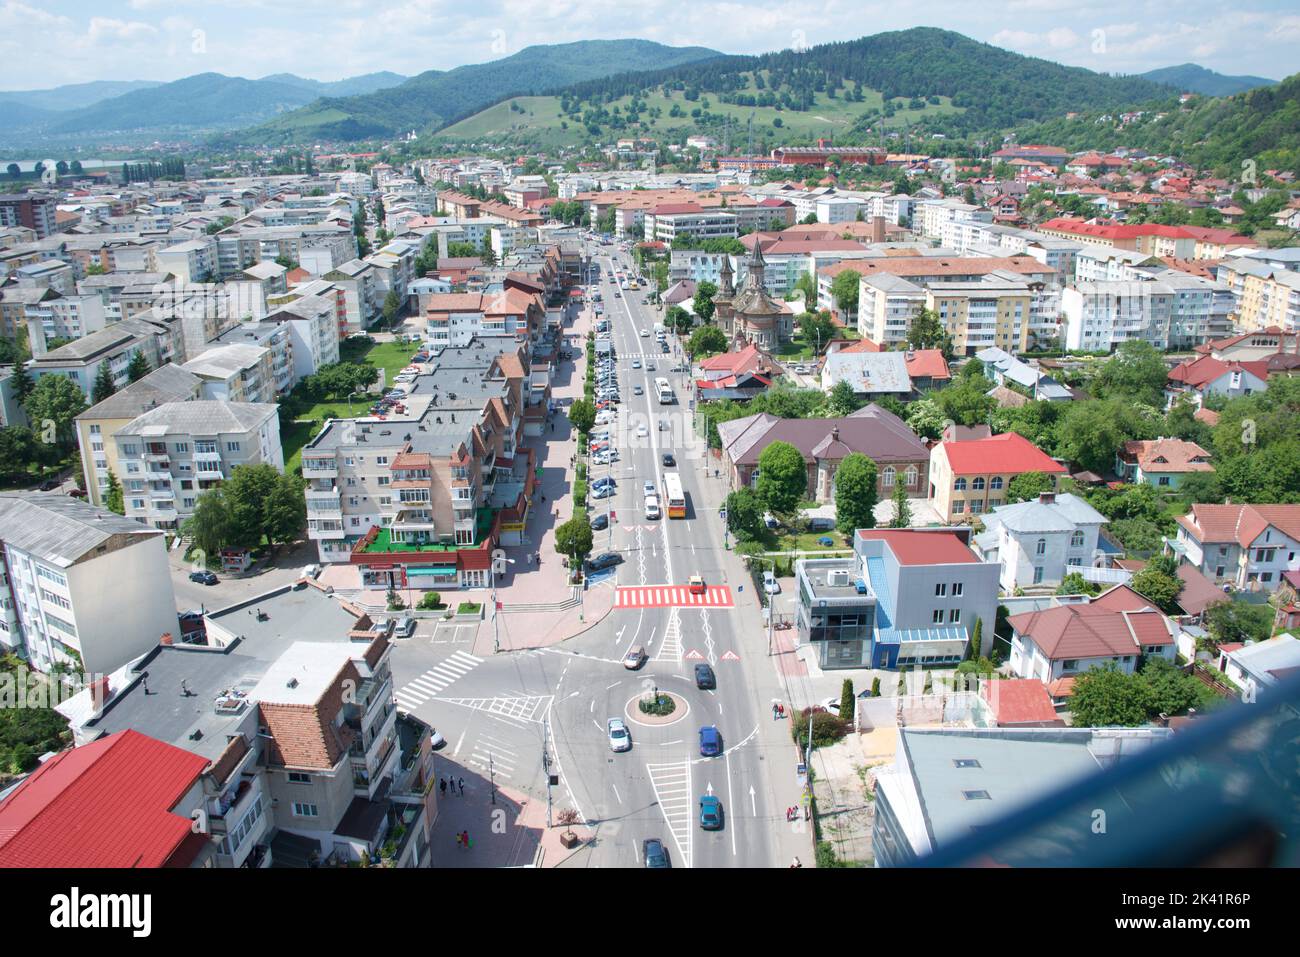 Top view scene in Piatra Neamt Stock Photo